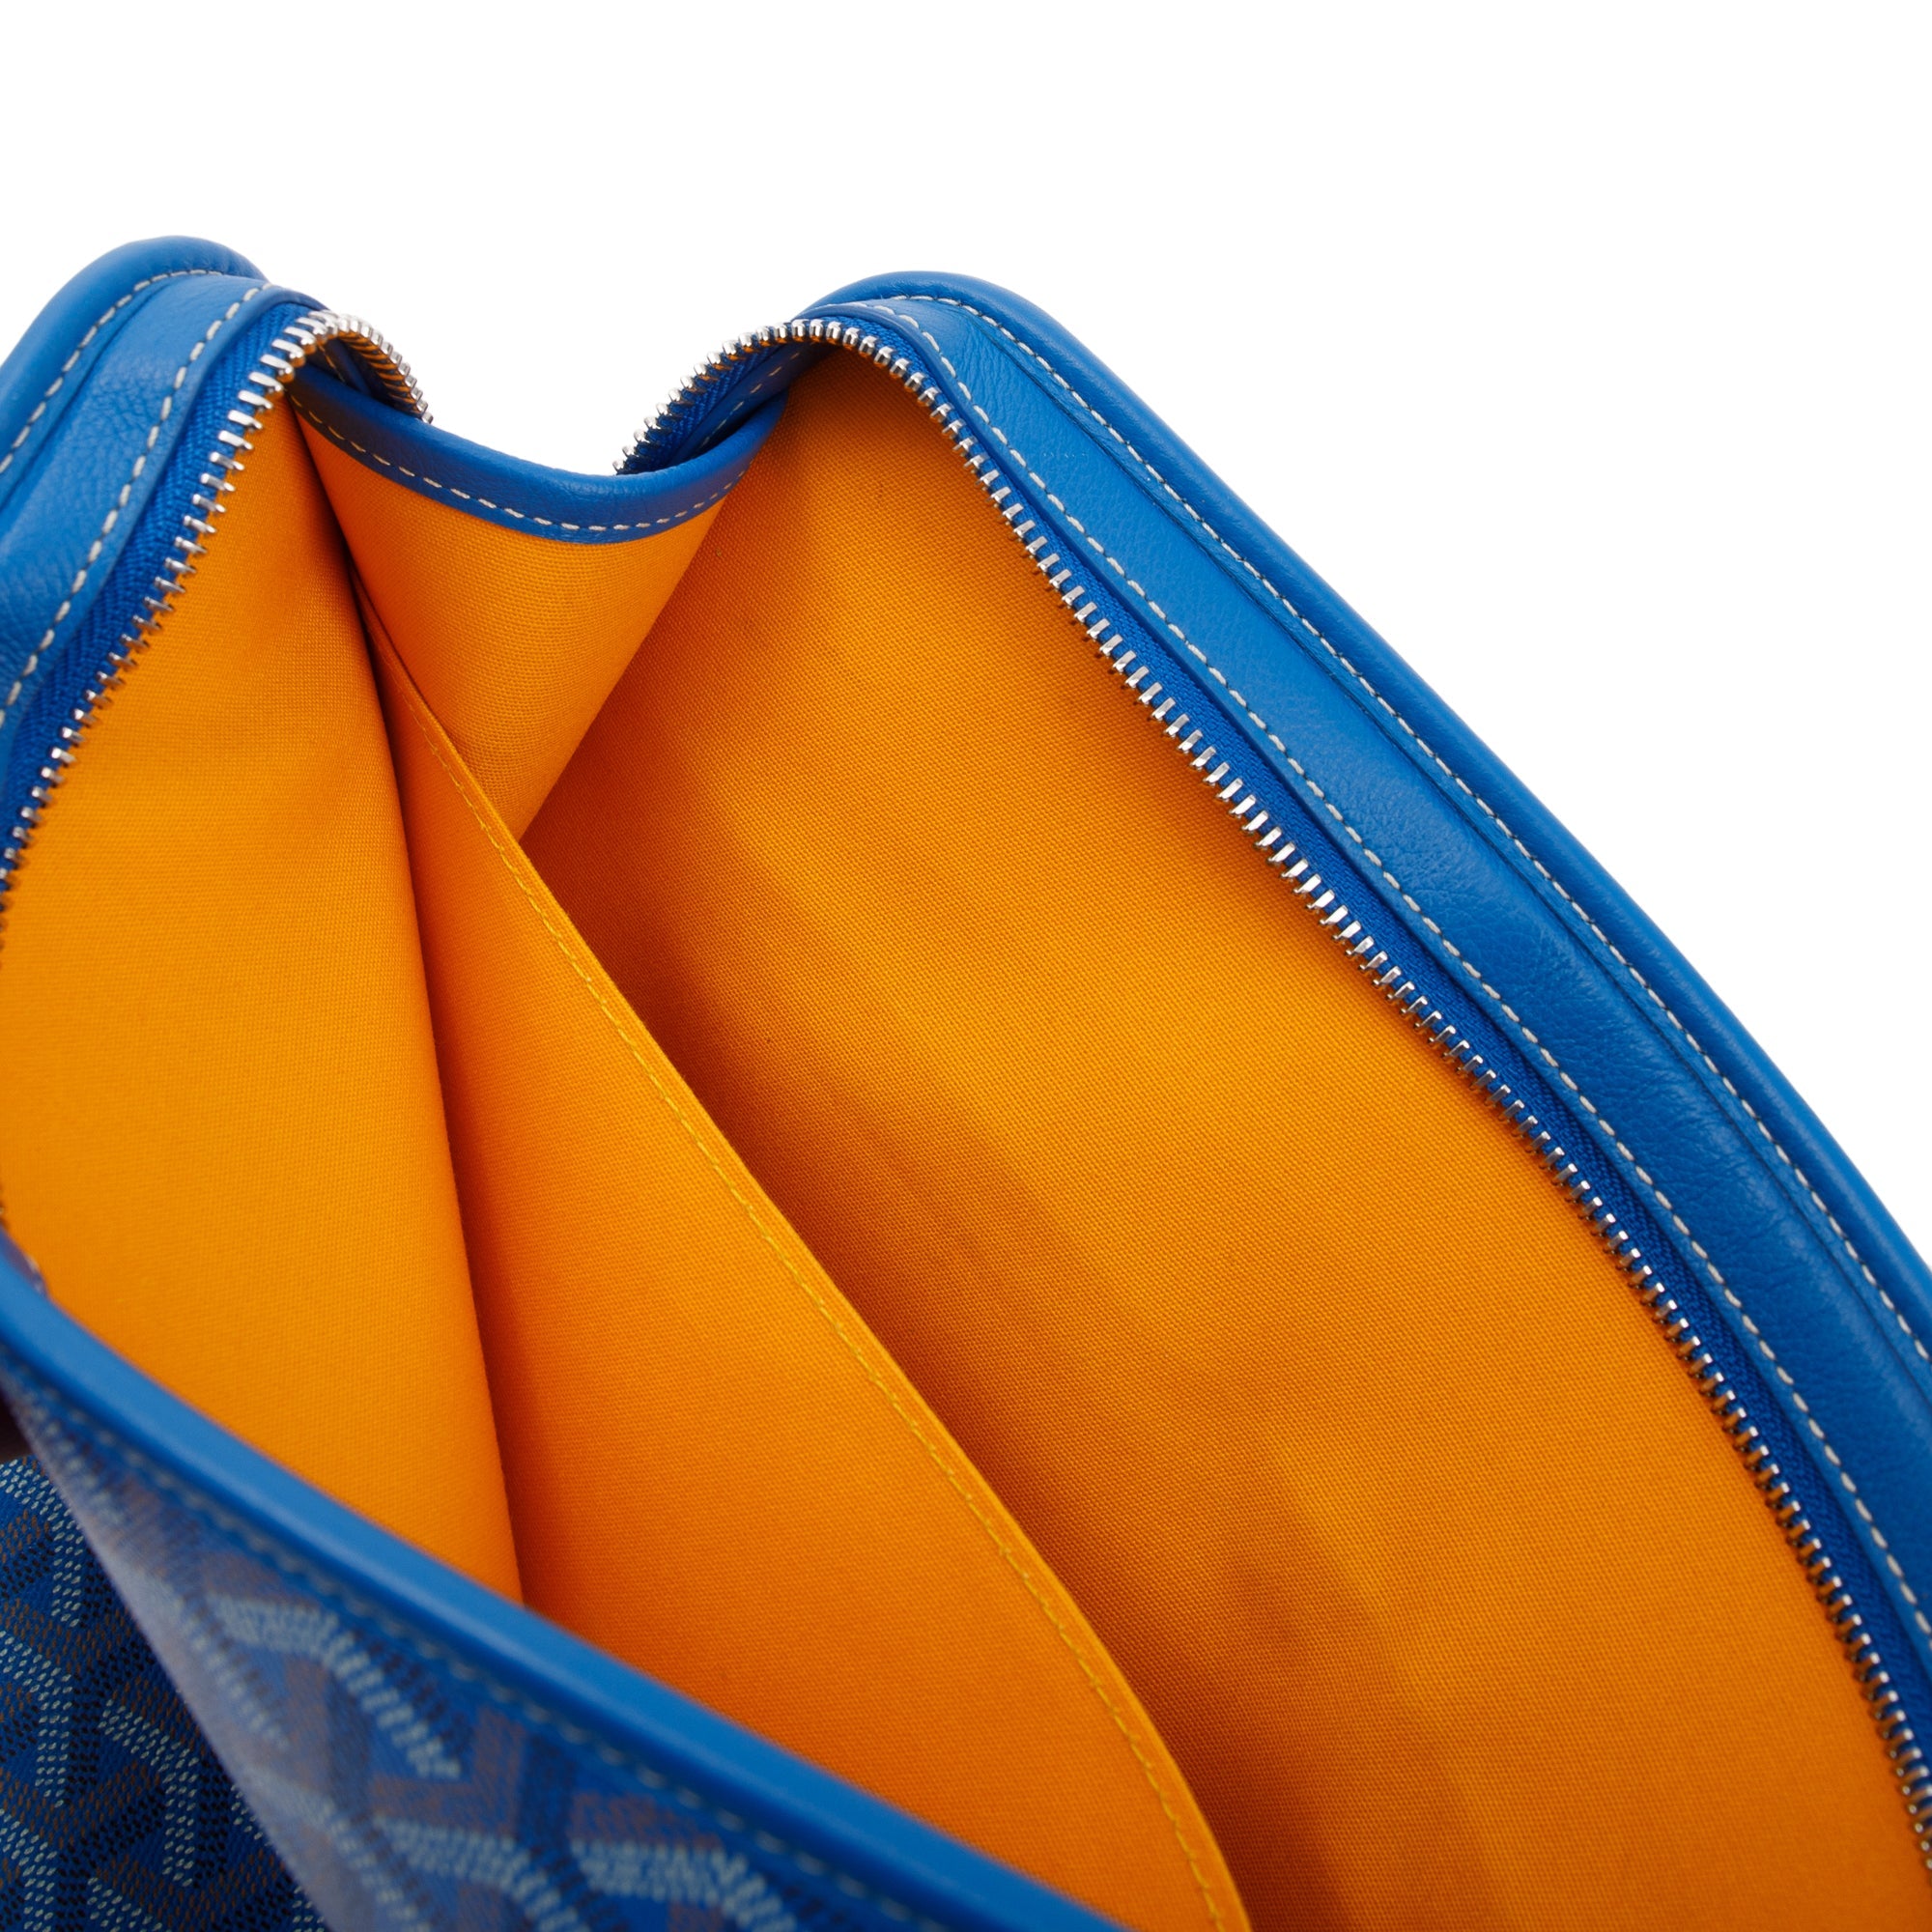 GOYARD Jouvence GM Toiletry Bag in Orange